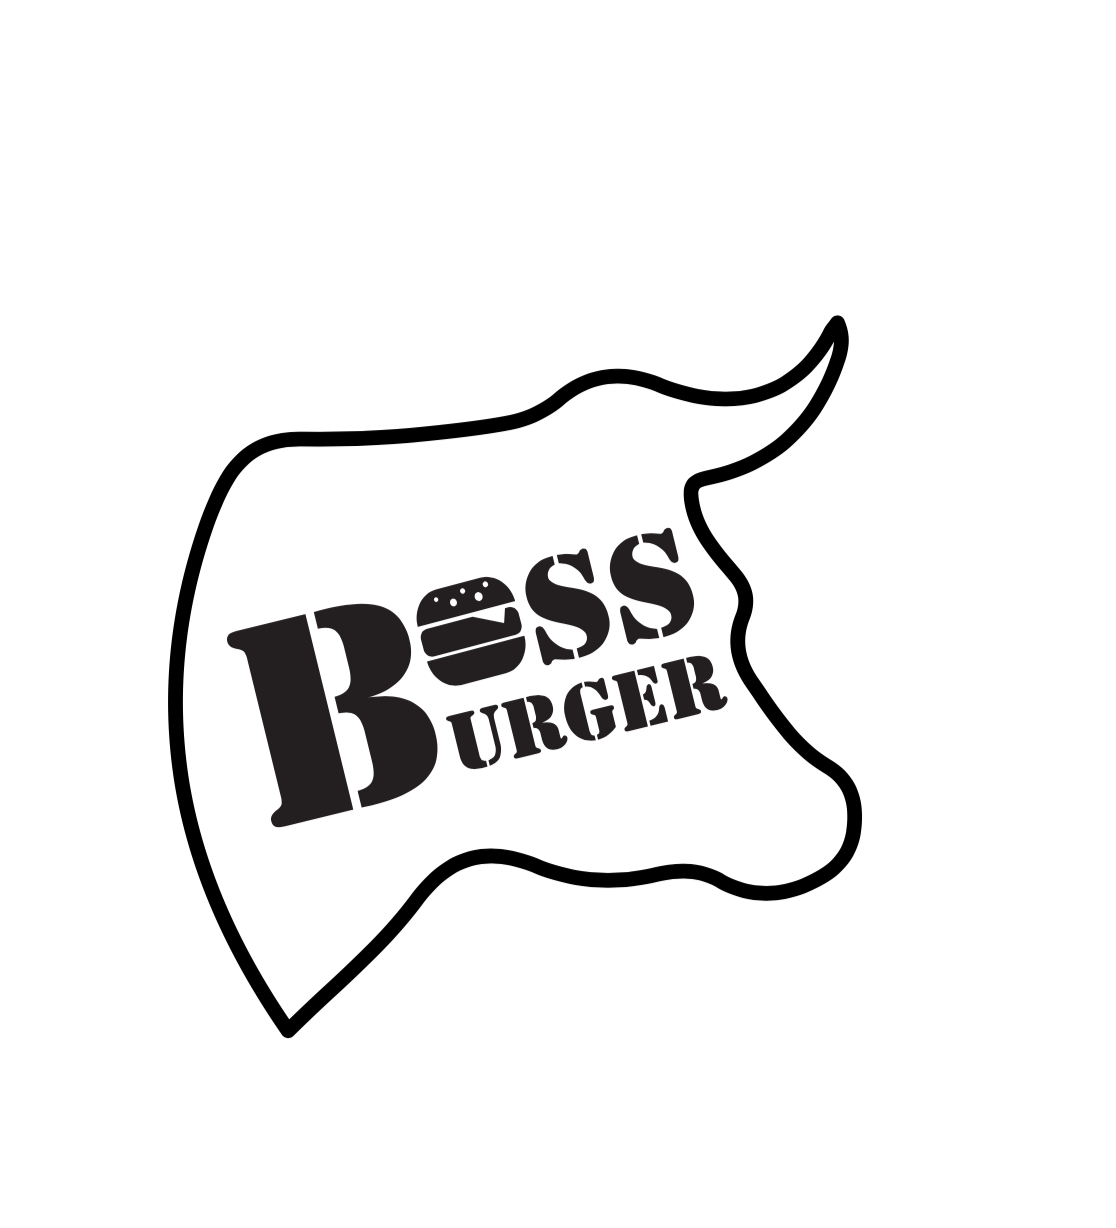 Boss Burger logo.png